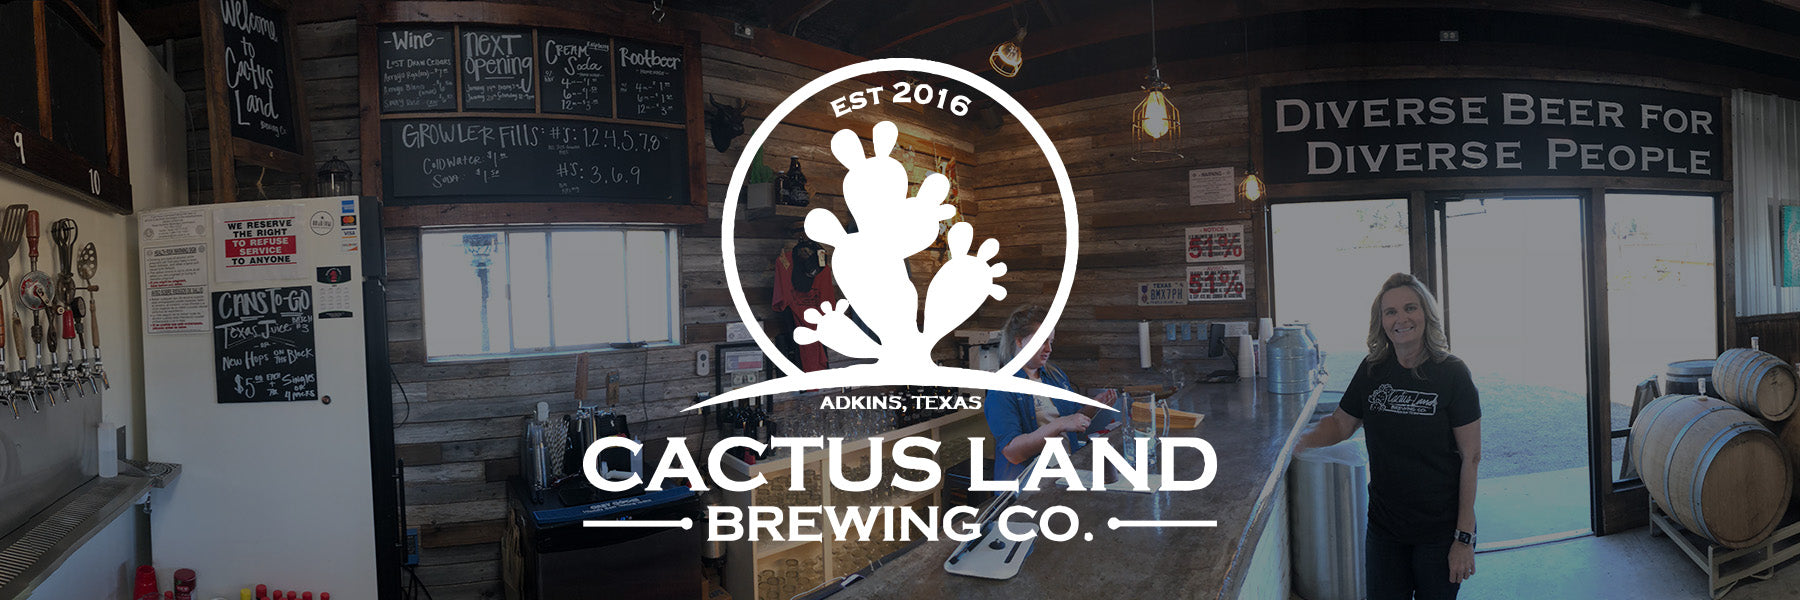 Cactus Land Brewing Co. | Adkins, TX